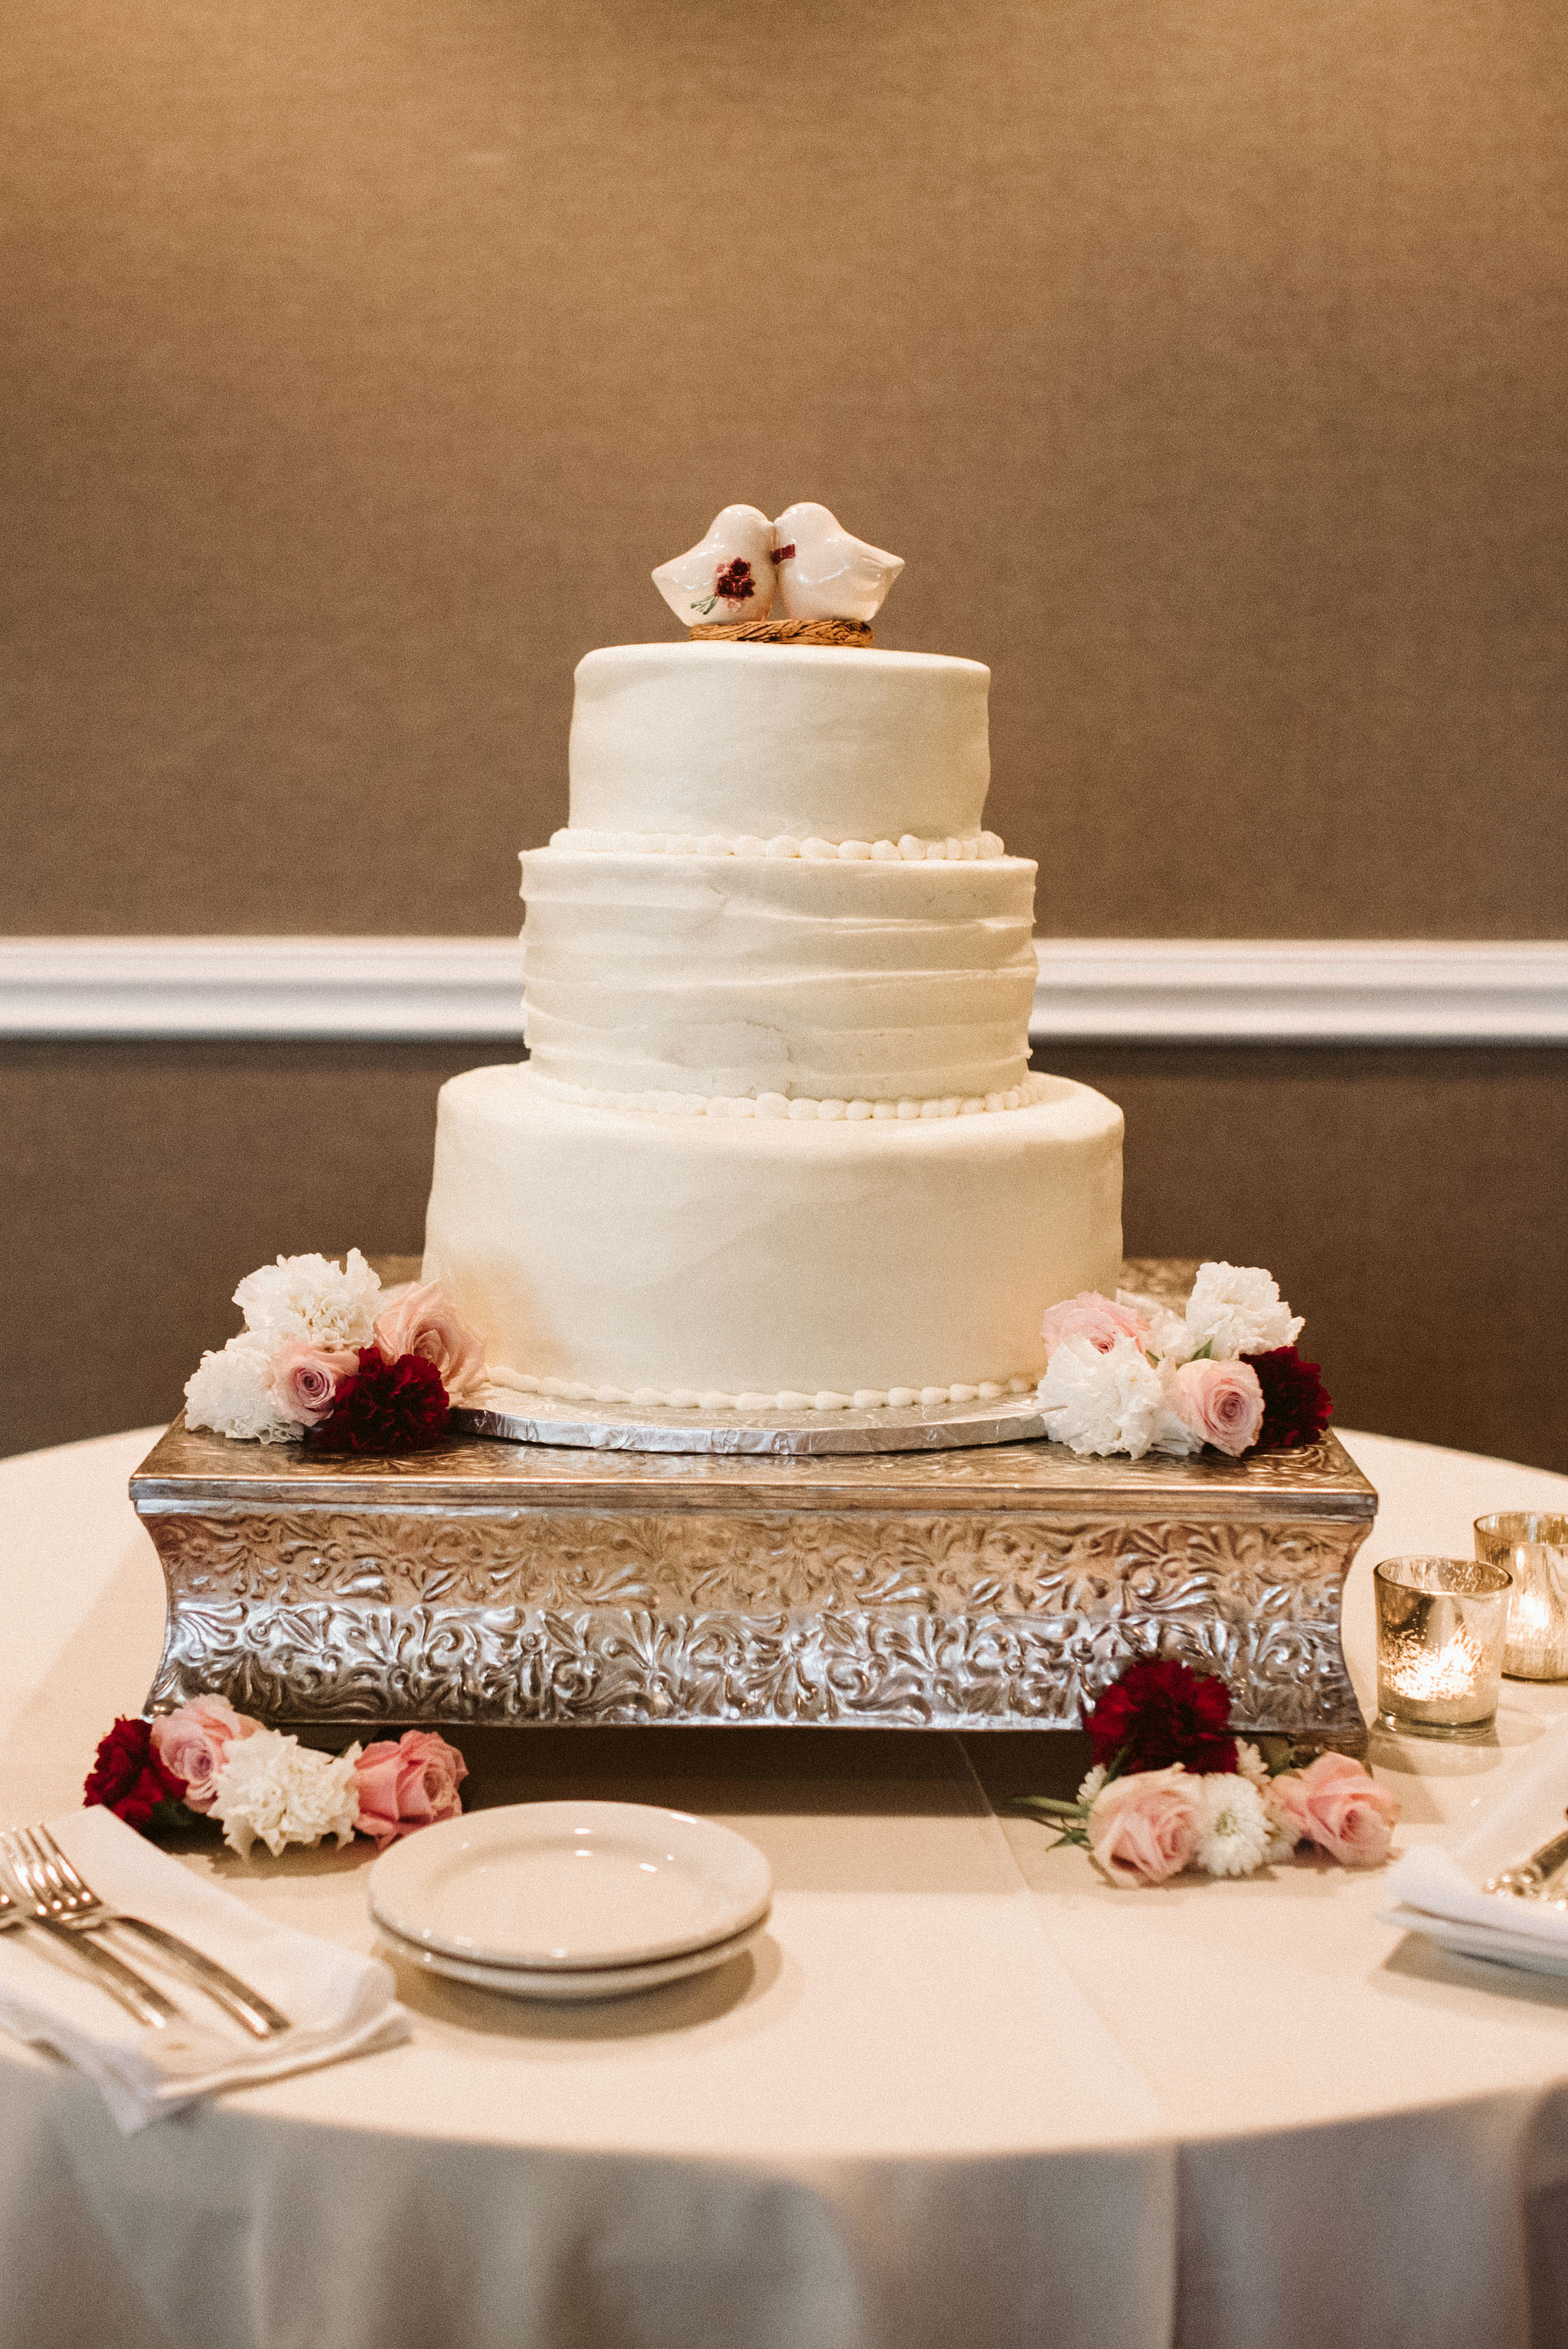  Phoenix Maryland, Baltimore Wedding Photographer, Eagle’s Nest Country Club, Classic, Romantic, Wedding Cake from Graul’s Market, Sweet Bird Cake Topper 